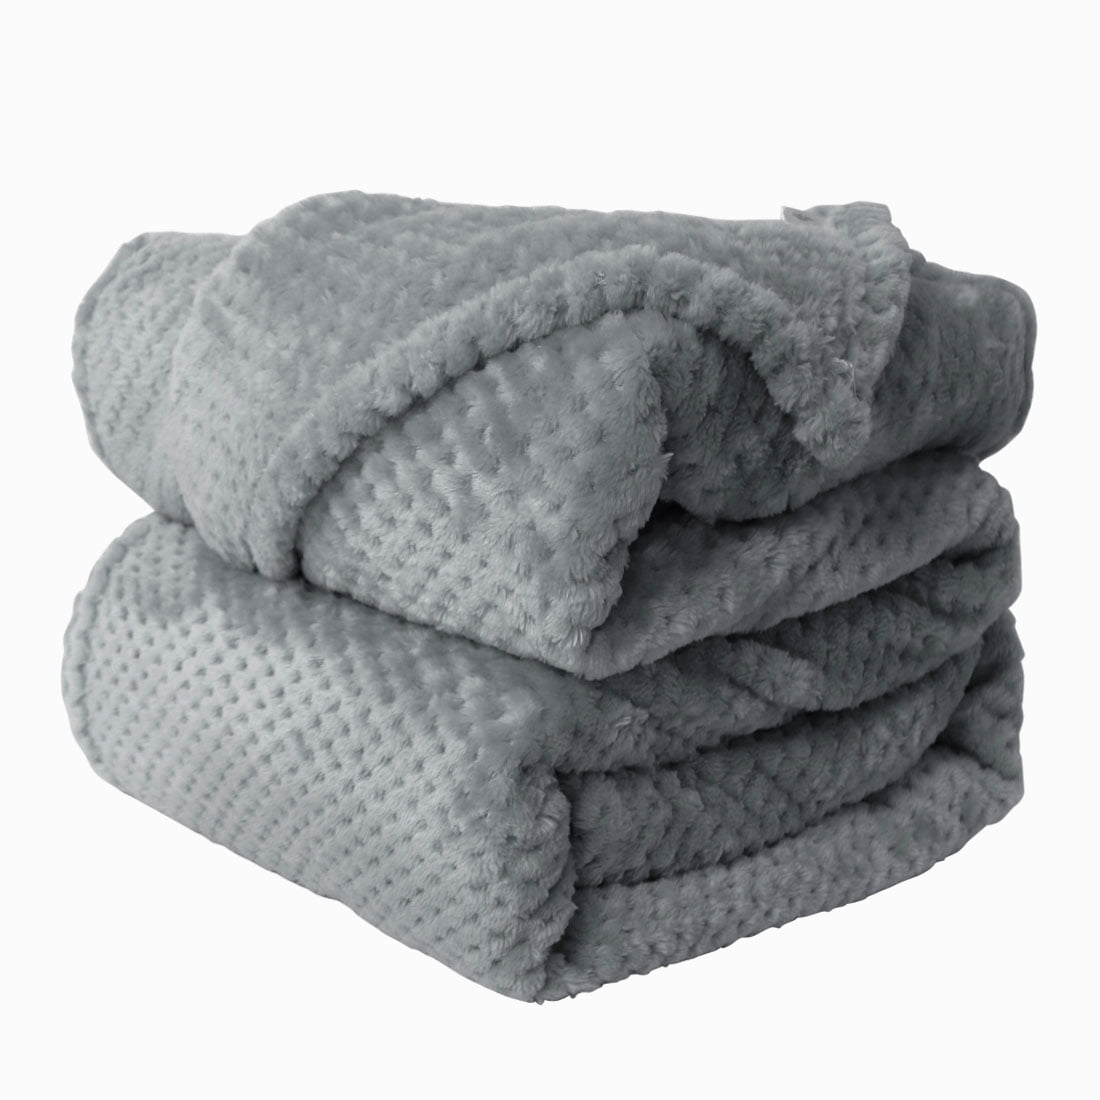 3x Blanket Seville Parchment Blanket Snuggle Blanket 200x150 Microfibre 